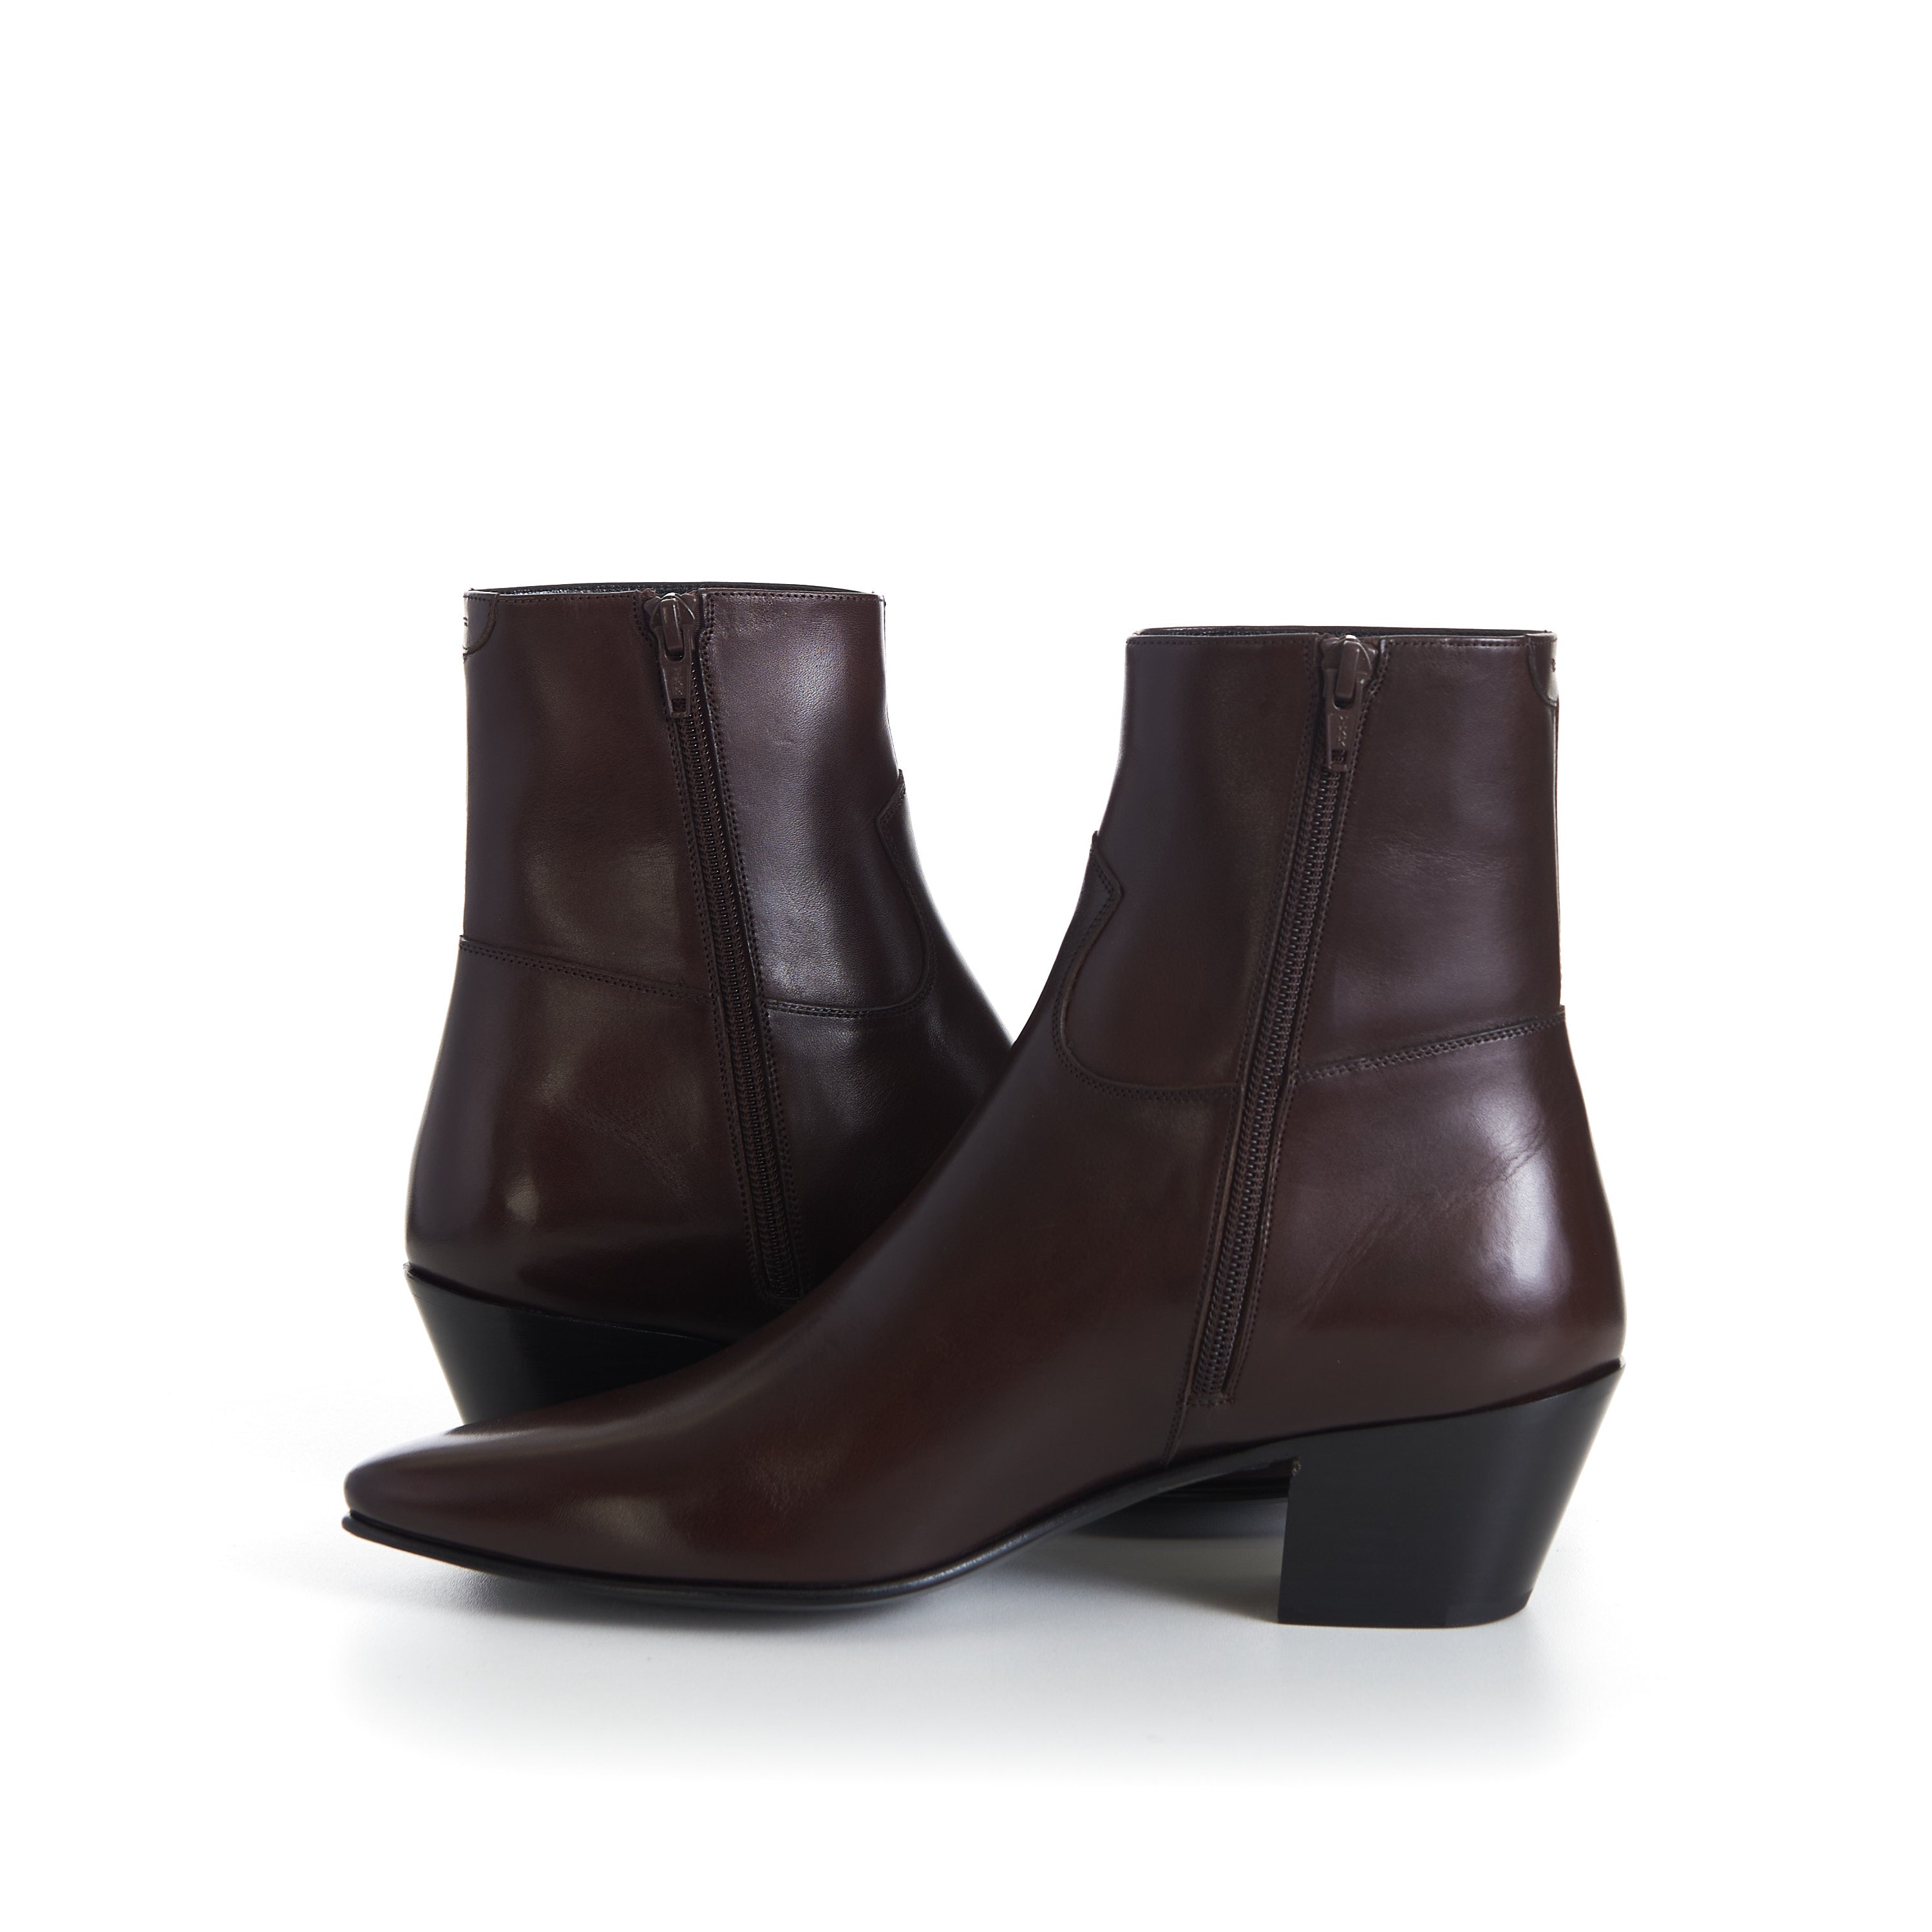 JACNO Zipped Ankle Boots - Oak Brown